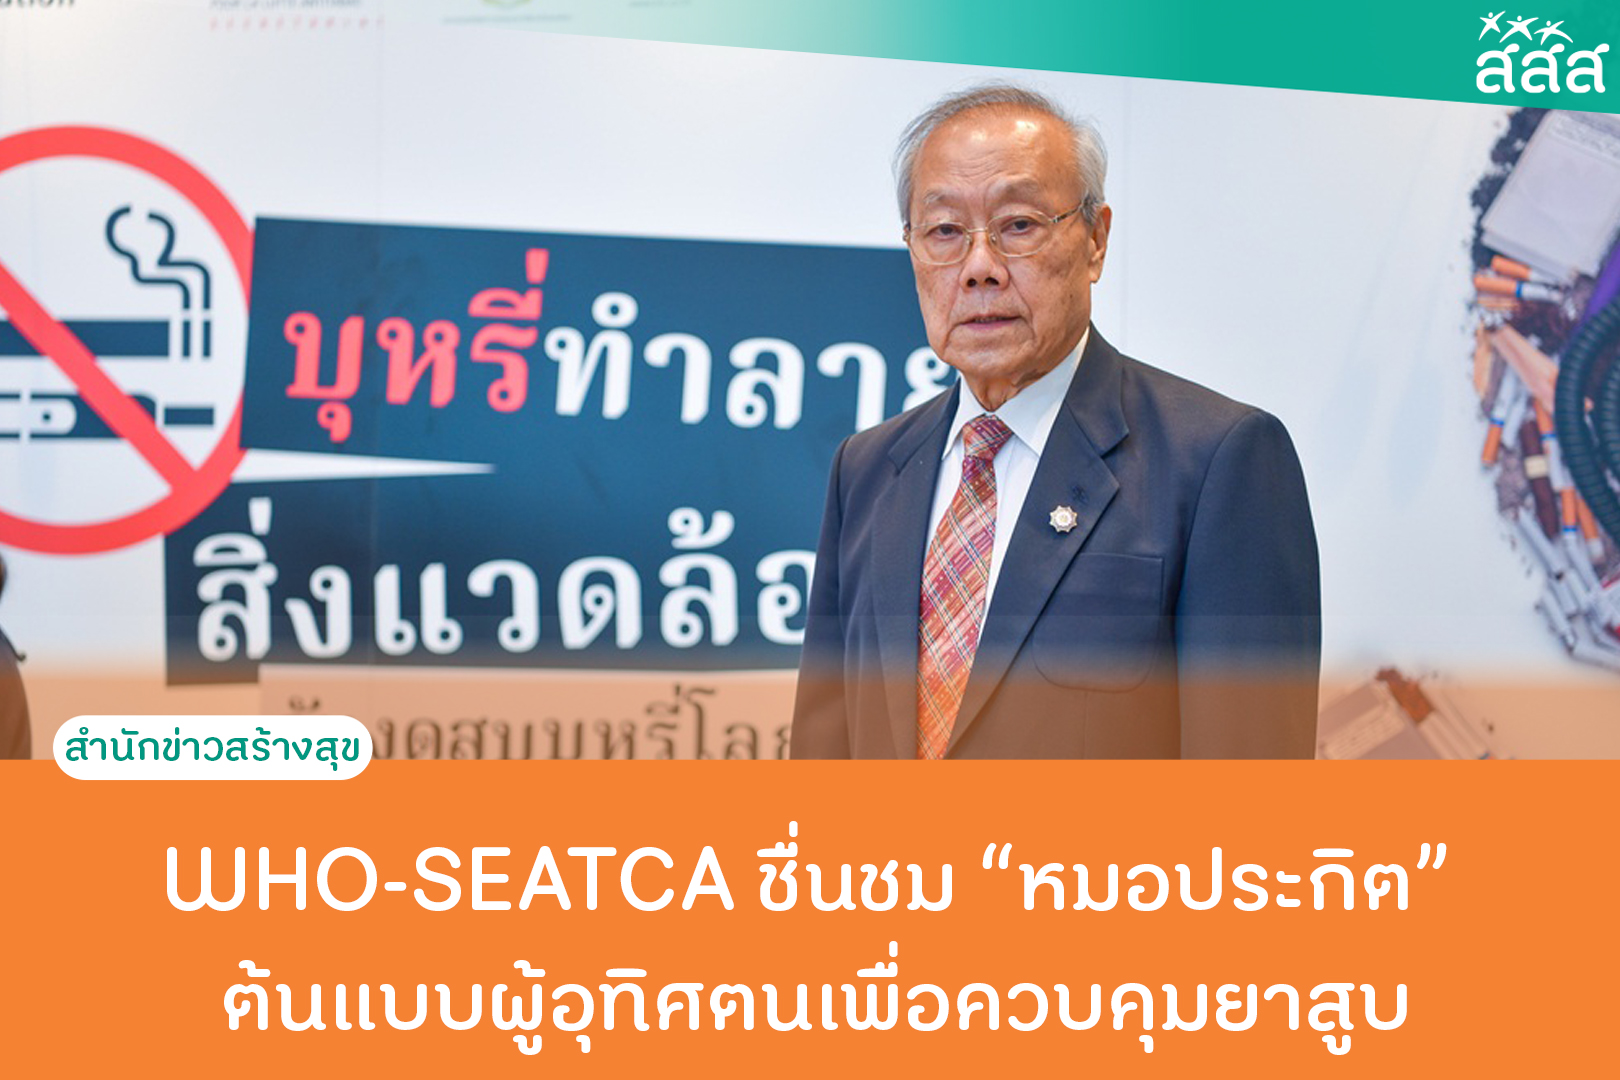 WHO-SEATCA ชื่นชม หมอประกิต ต้นแบบผู้อุทิศตนเพื่อควบคุมยาสูบ thaihealth